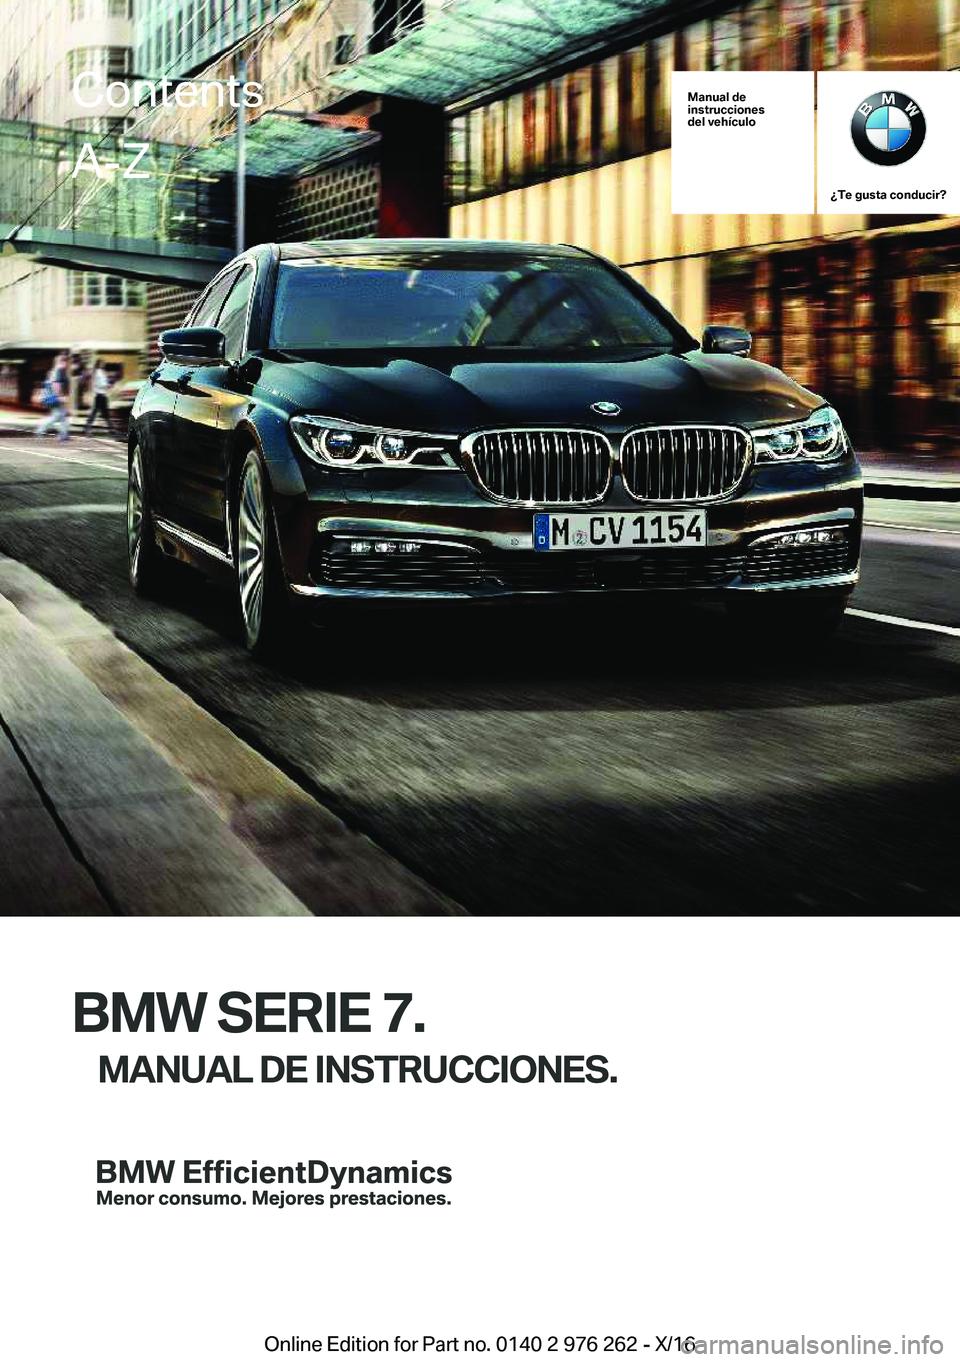 BMW 7 SERIES 2017  Manuales de Empleo (in Spanish) �M�a�n�u�a�l��d�e
�i�n�s�t�r�u�c�c�i�o�n�e�s
�d�e�l��v�e�h�